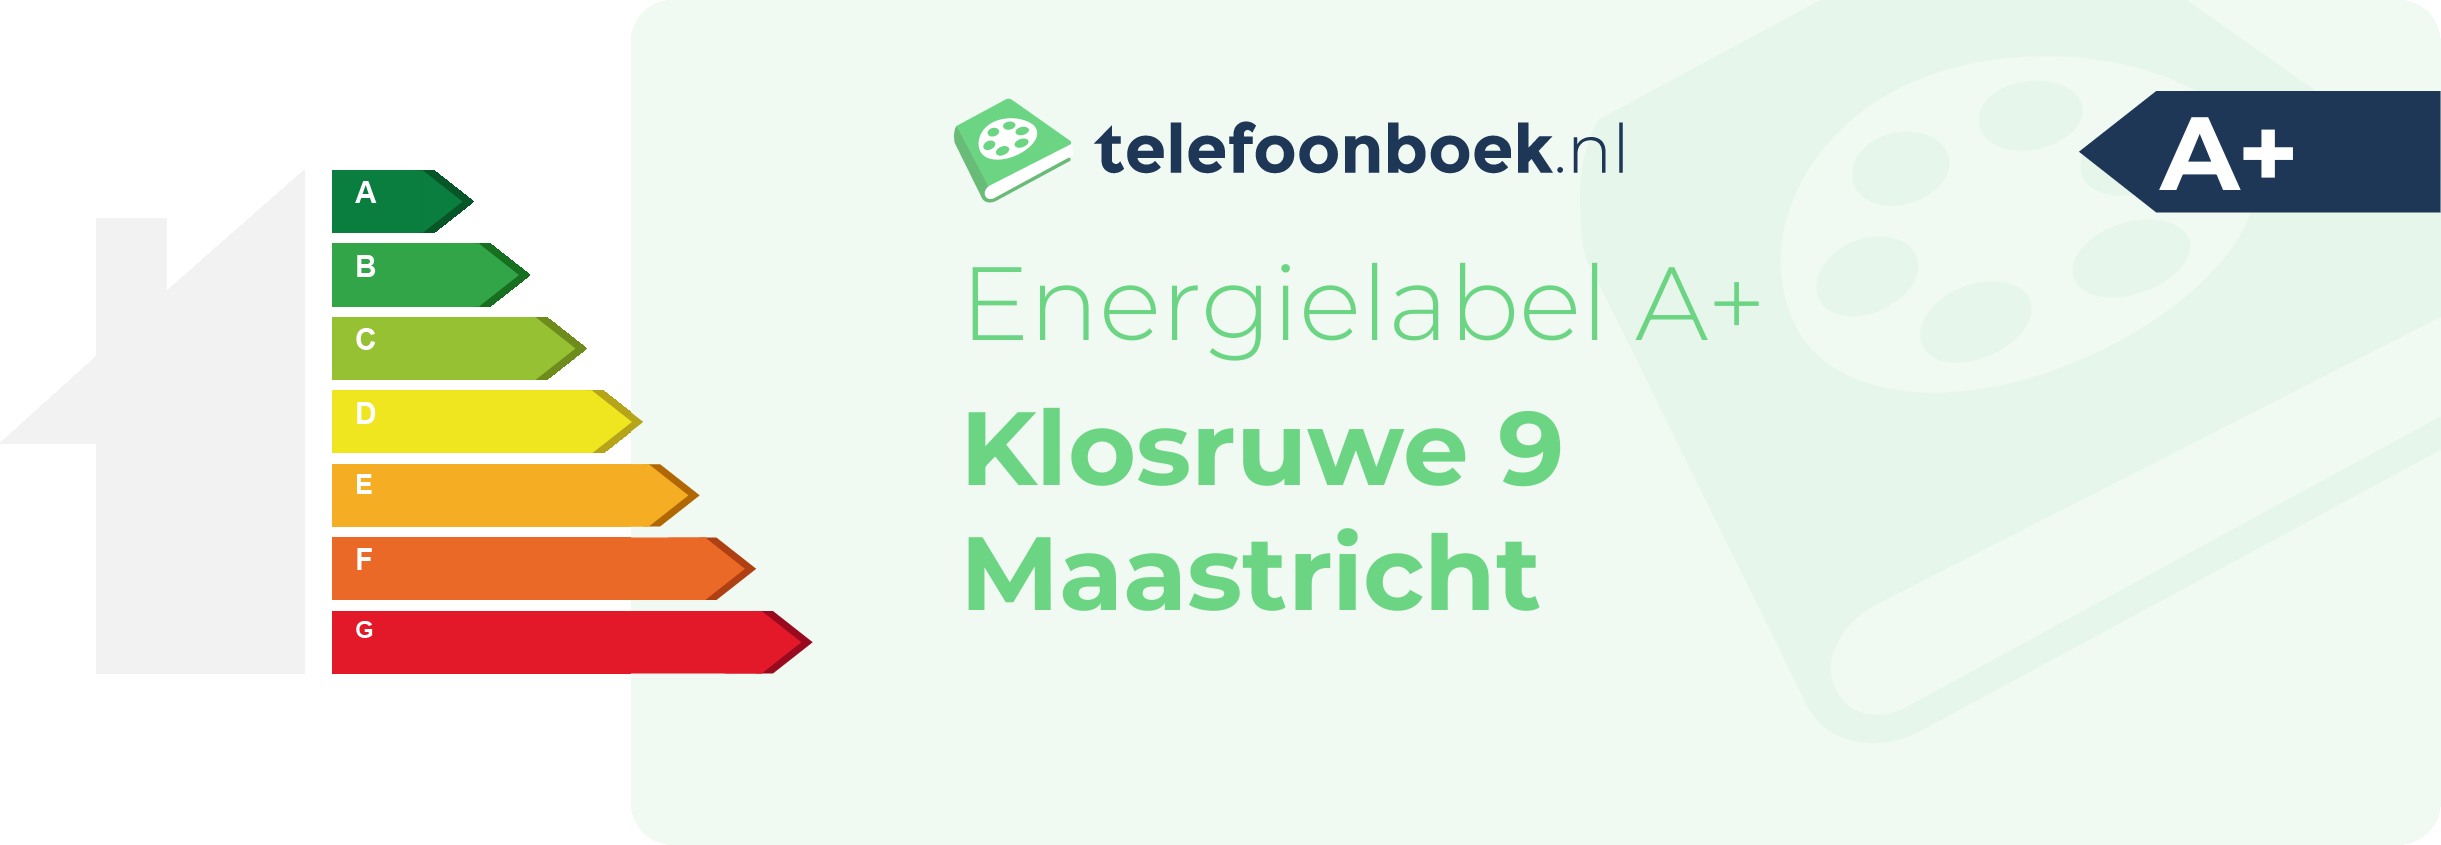 Energielabel Klosruwe 9 Maastricht